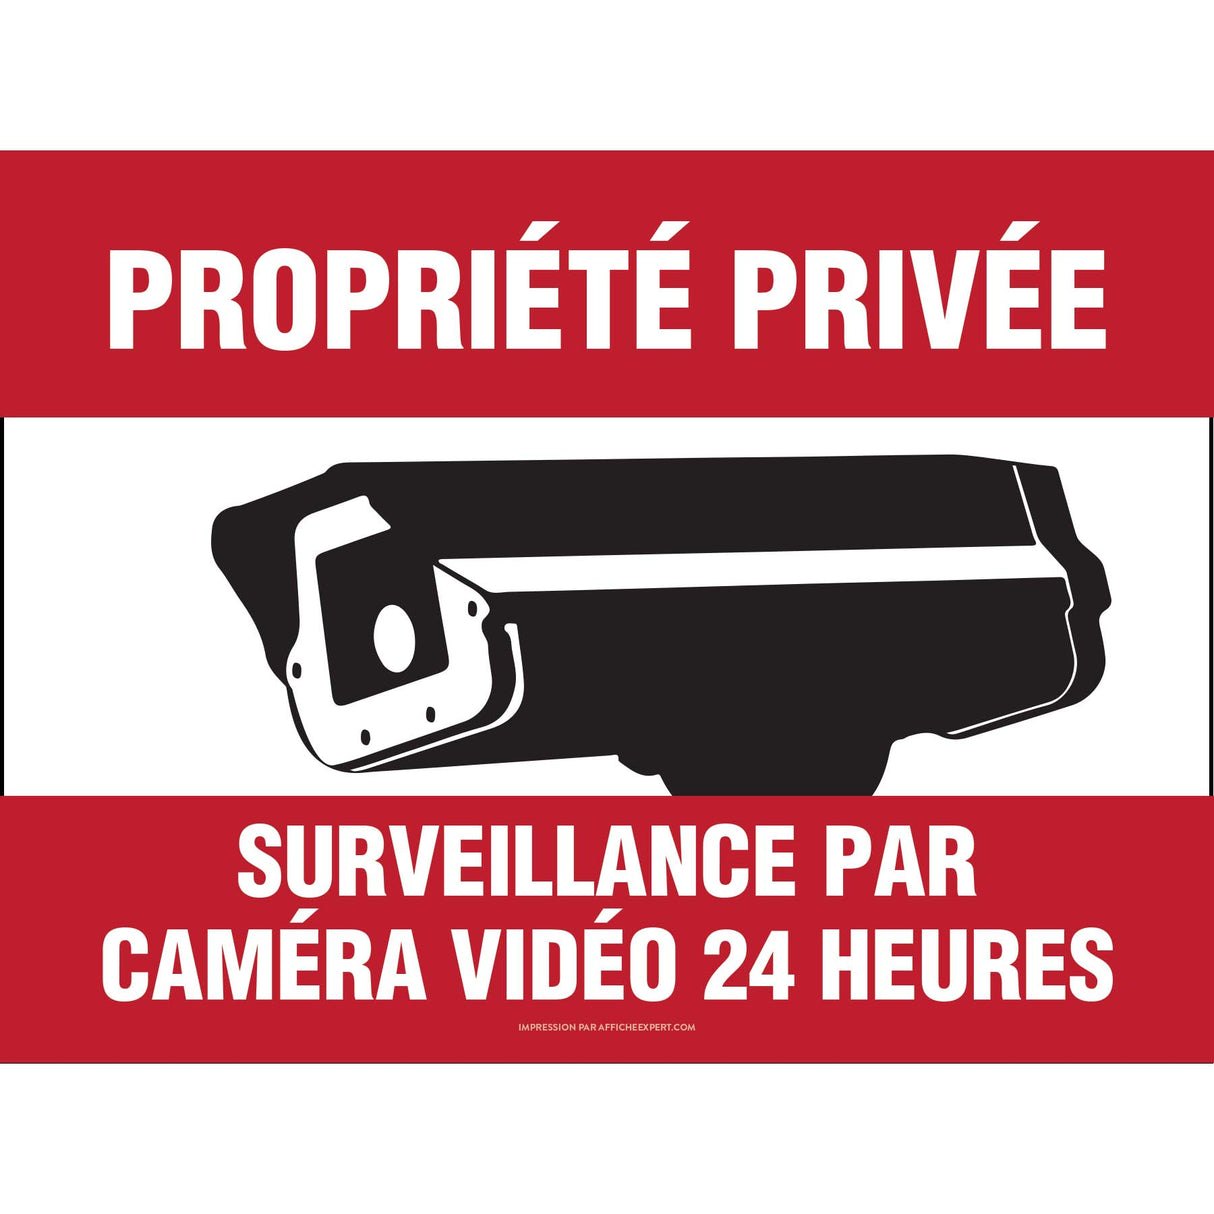 Surveillance par caméra 24 heures (Propriété privée)